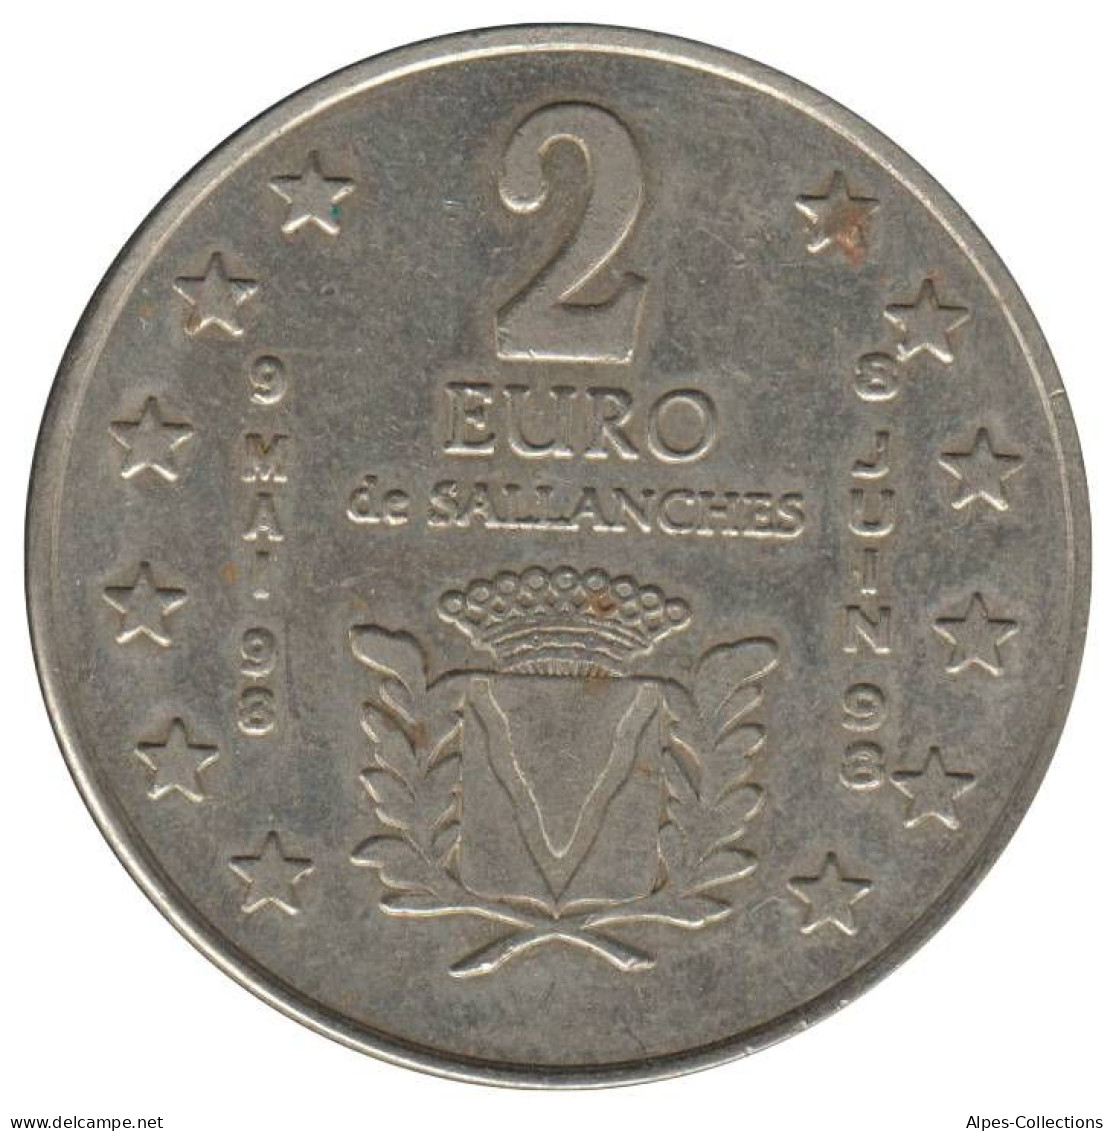 SALLANCHES - EU0020.1 - 2 EURO DES VILLES - Réf: NR - 1998 - Euros Des Villes